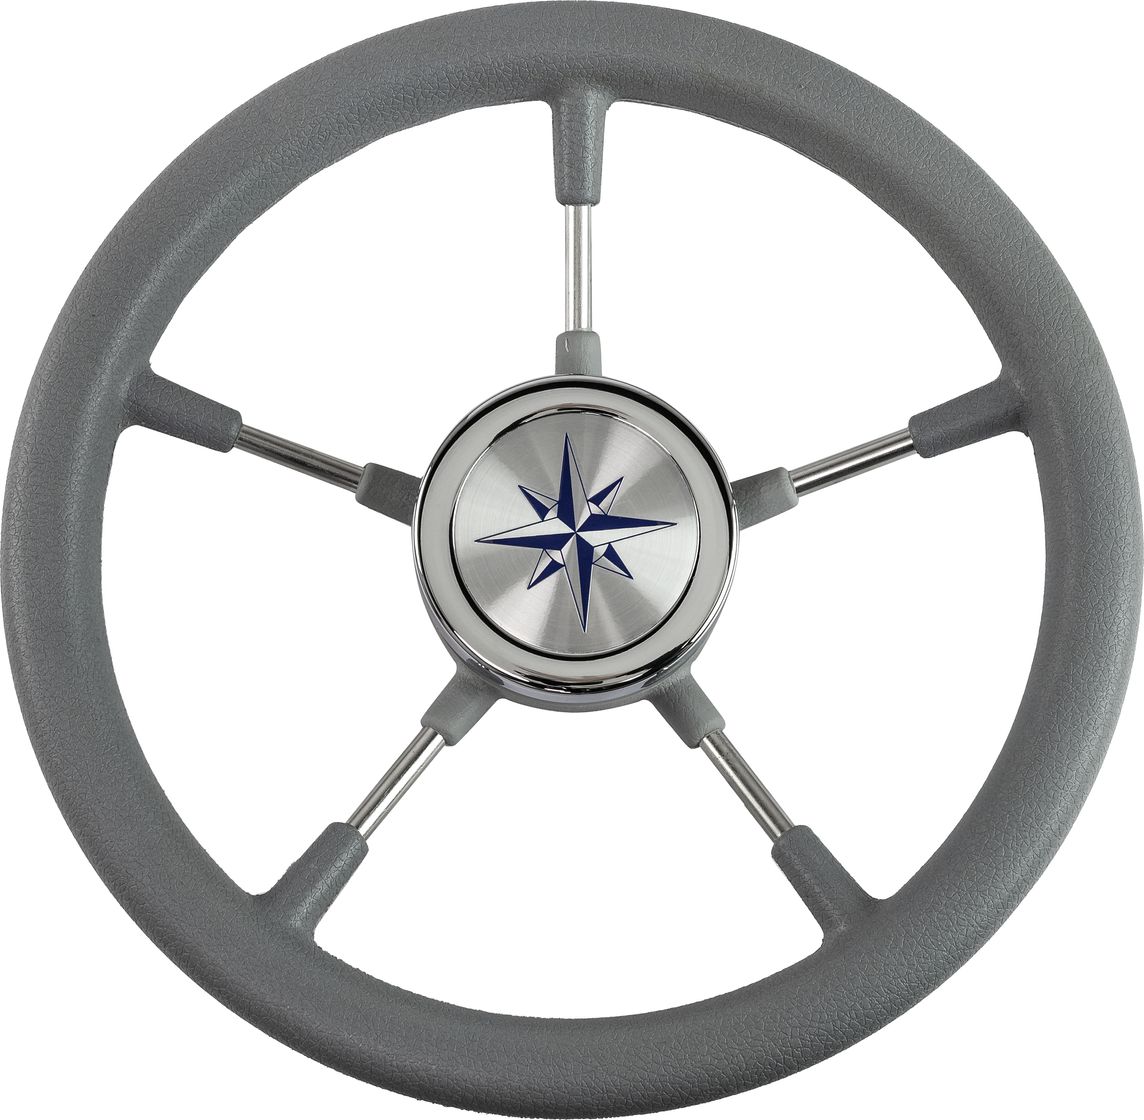 Рулевое колесо RIVA RSL обод серый, спицы серебряные д. 320 мм VN732022-03 рулевое колесо delfino обод спицы серебряные д 340 мм vn70401 01